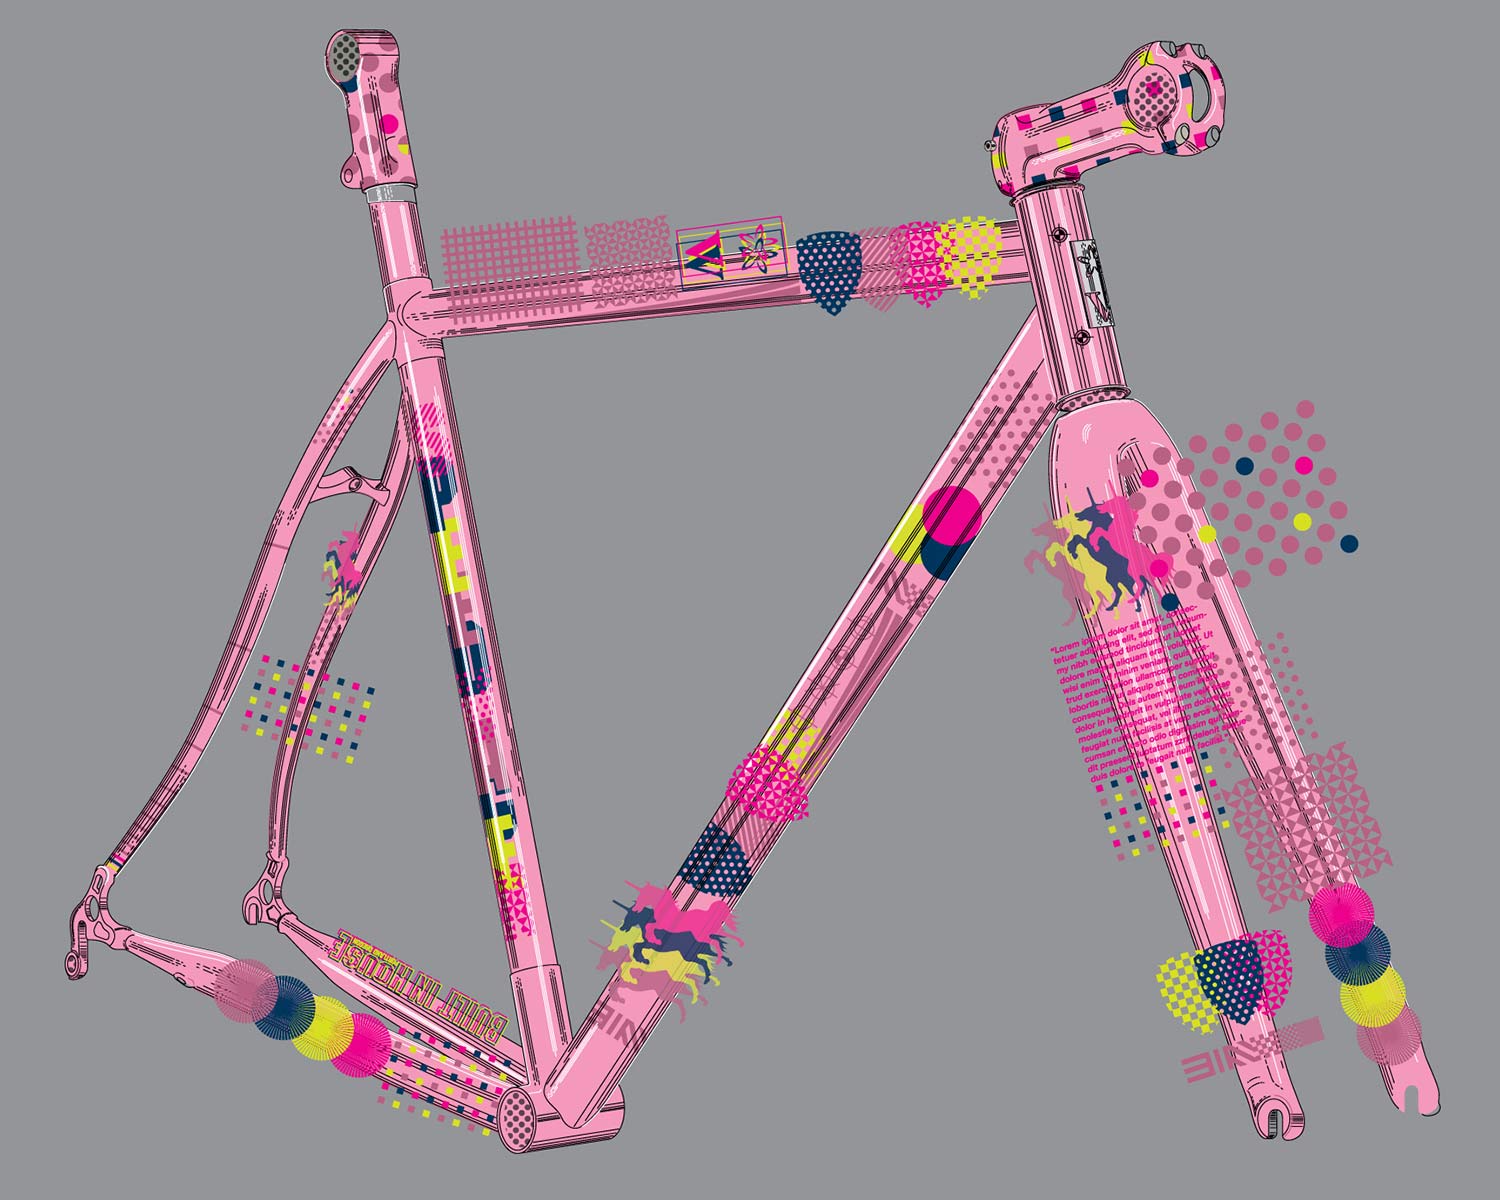 2021-2022 Speedvagen Surprise Me series, full-custom Vanilla workshop road bike with surprise paintjob inspired by printers proofs, in pink